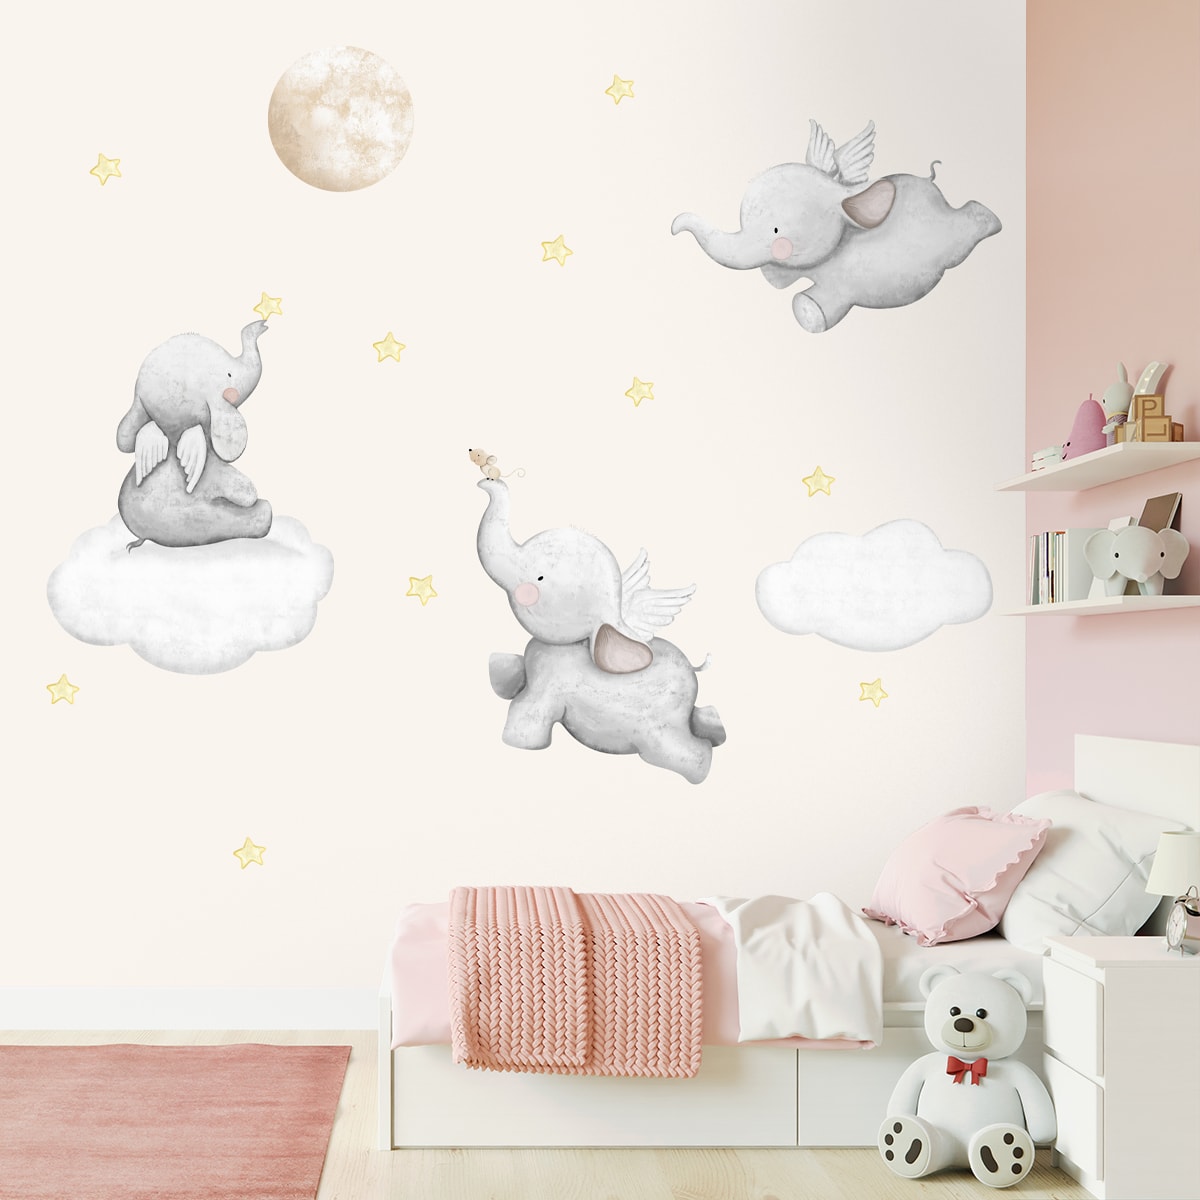 Dreamy Elephant Design for Kids Room Nursery Wallpaper